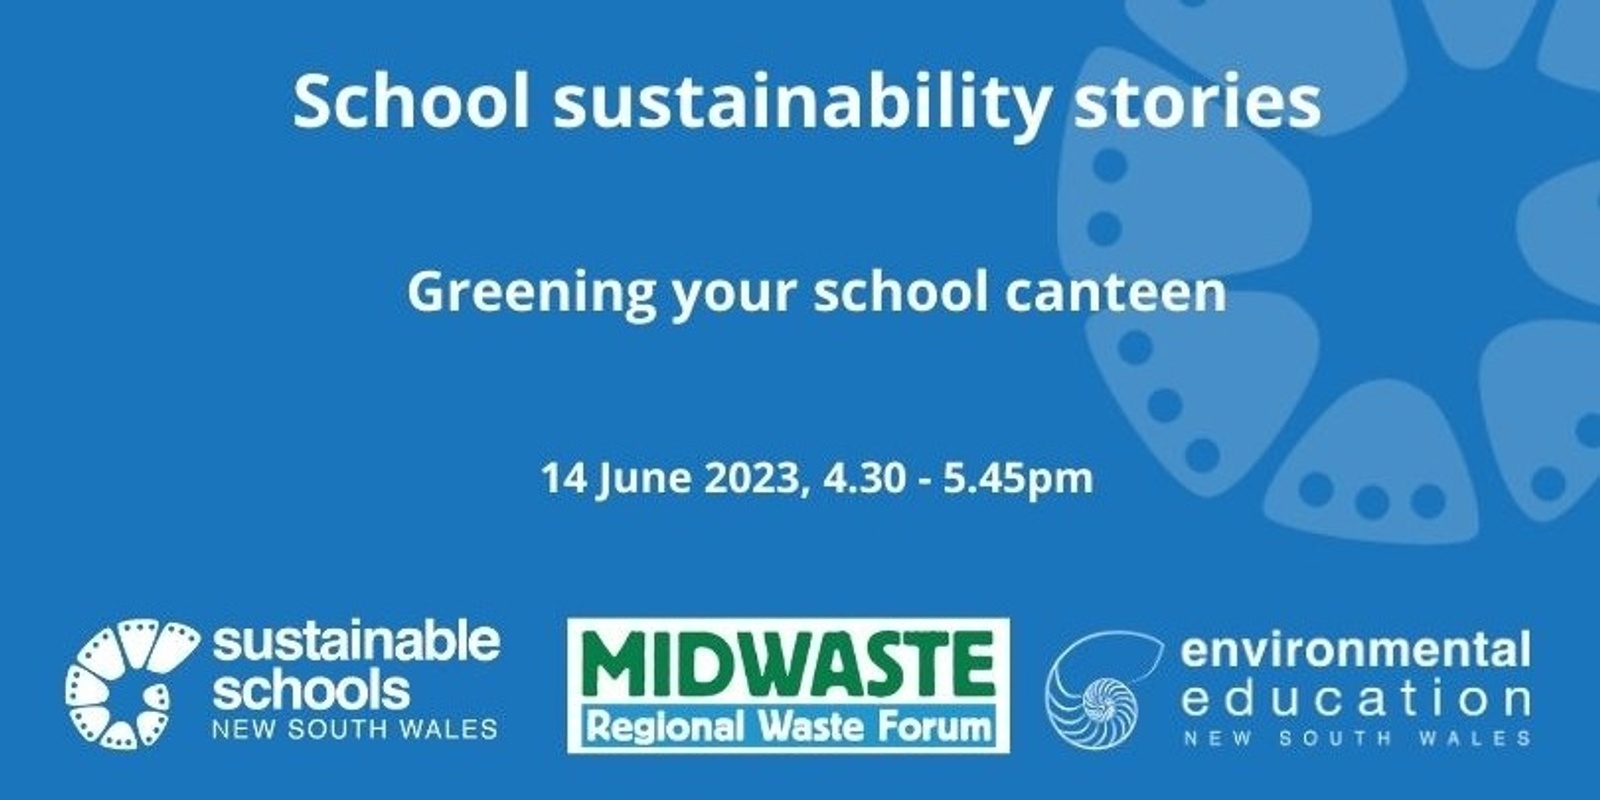 School sustainability stories